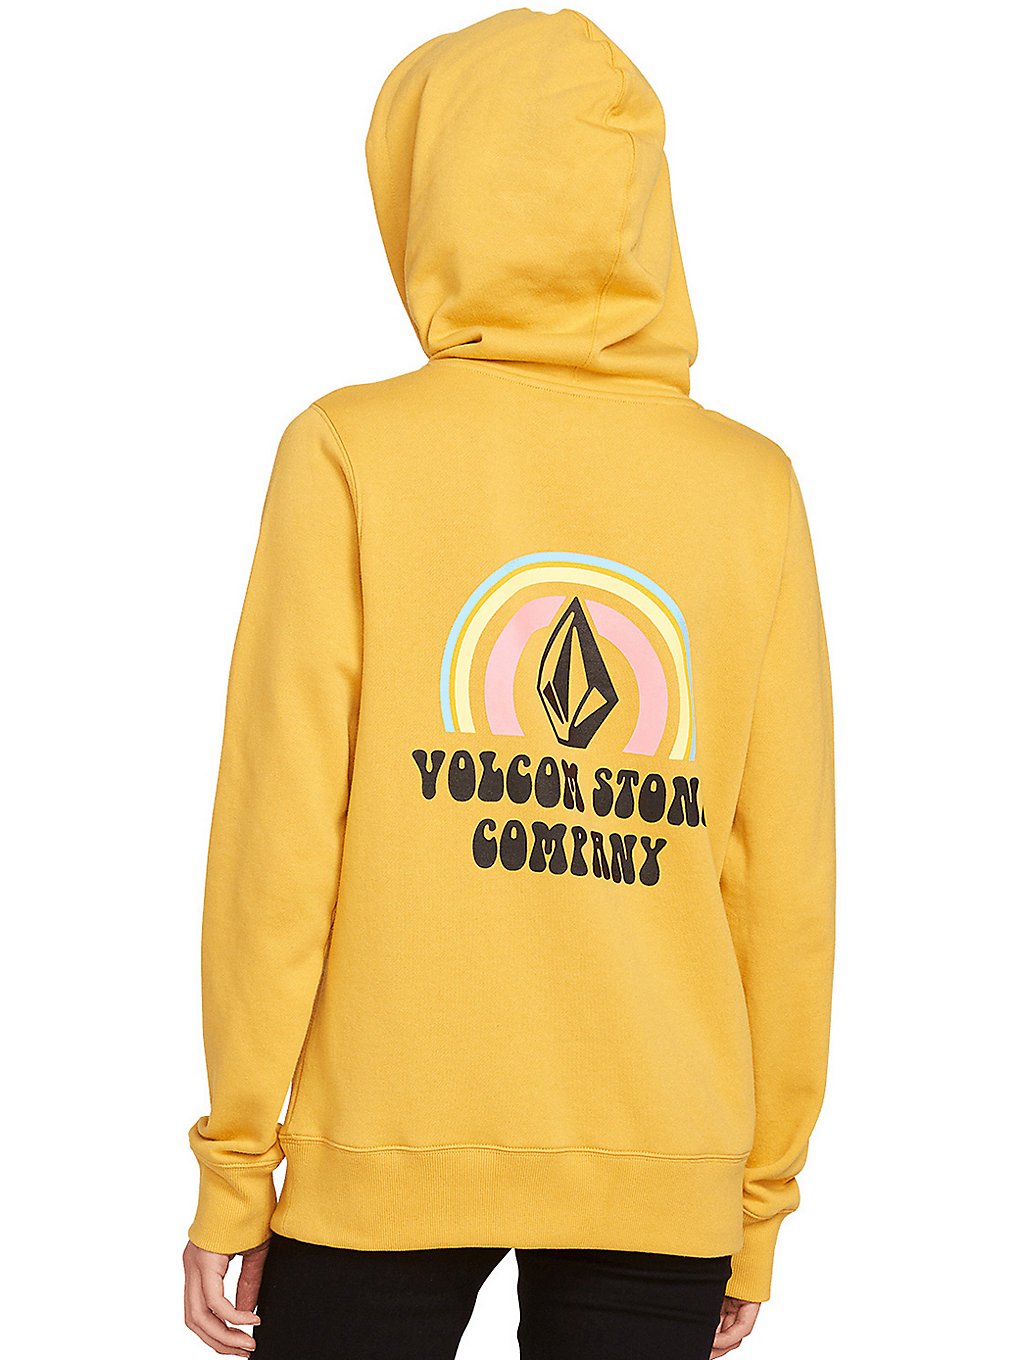 Volcom vol stone hoodie keltainen, volcom